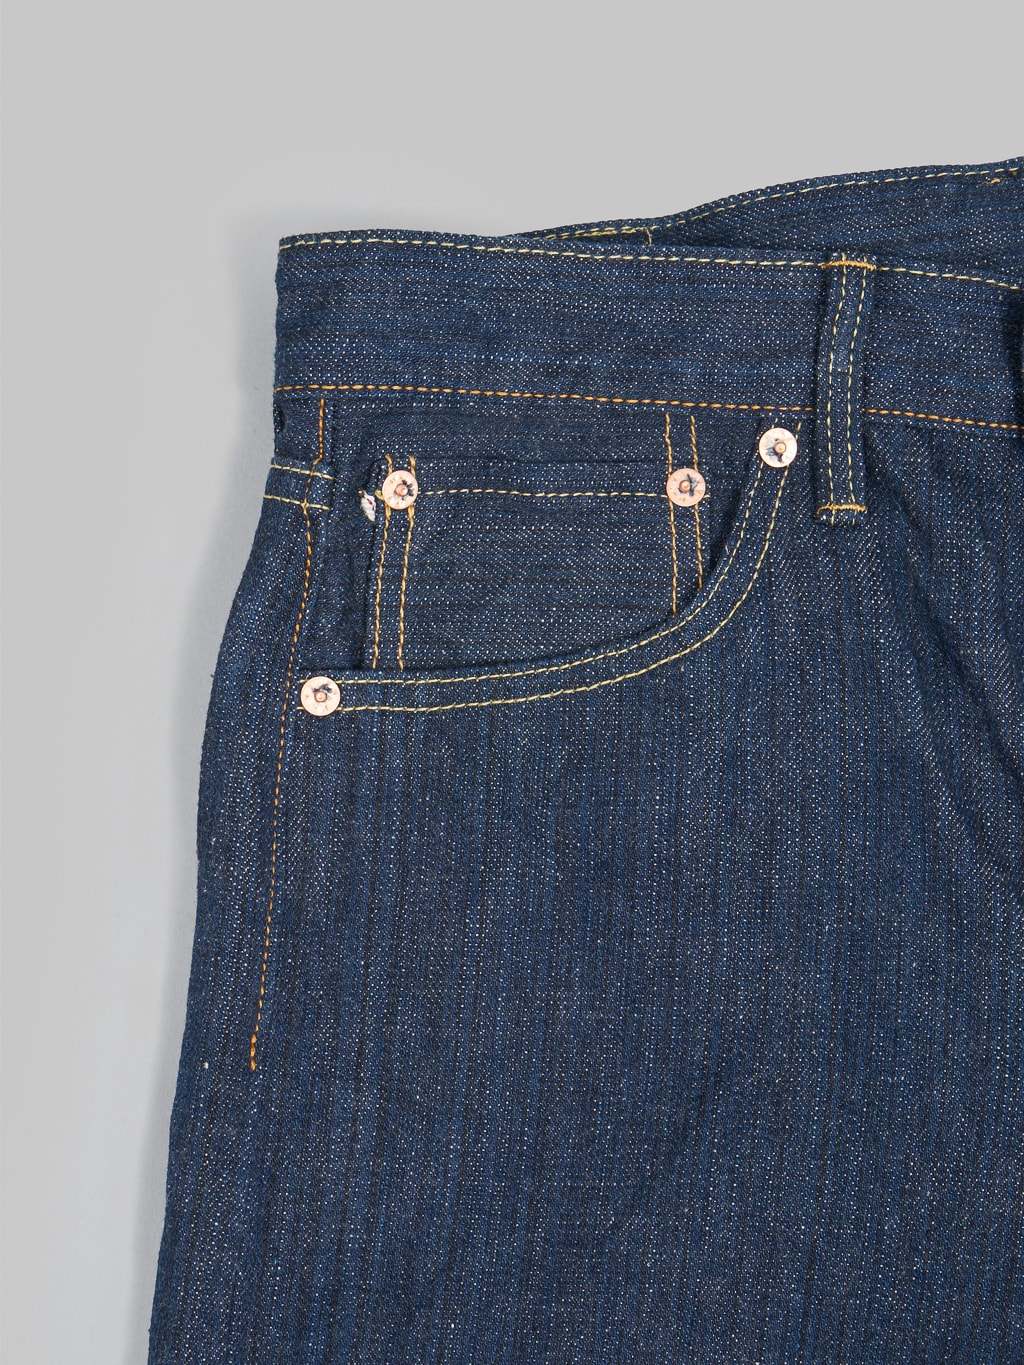 Oni denim kiwami indigo regular selvedge jeans peek a boo